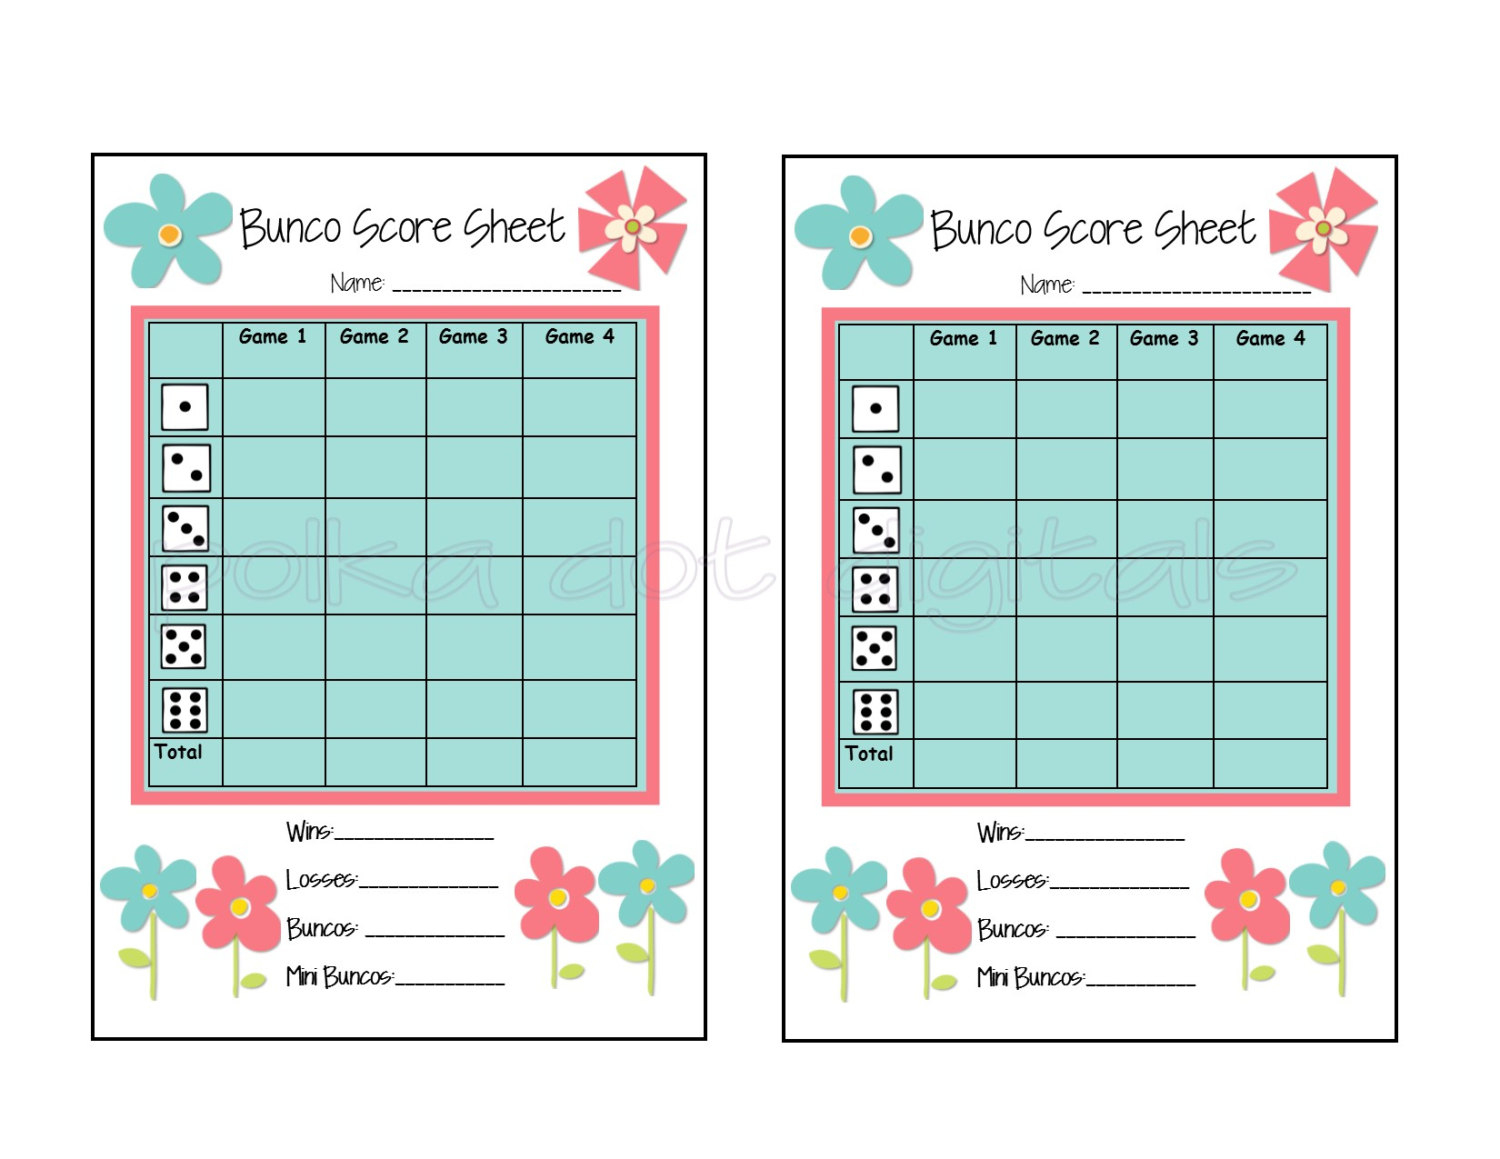 Pinterest Bunco Score Sheets - Free Printable Bunco Game Sheets.